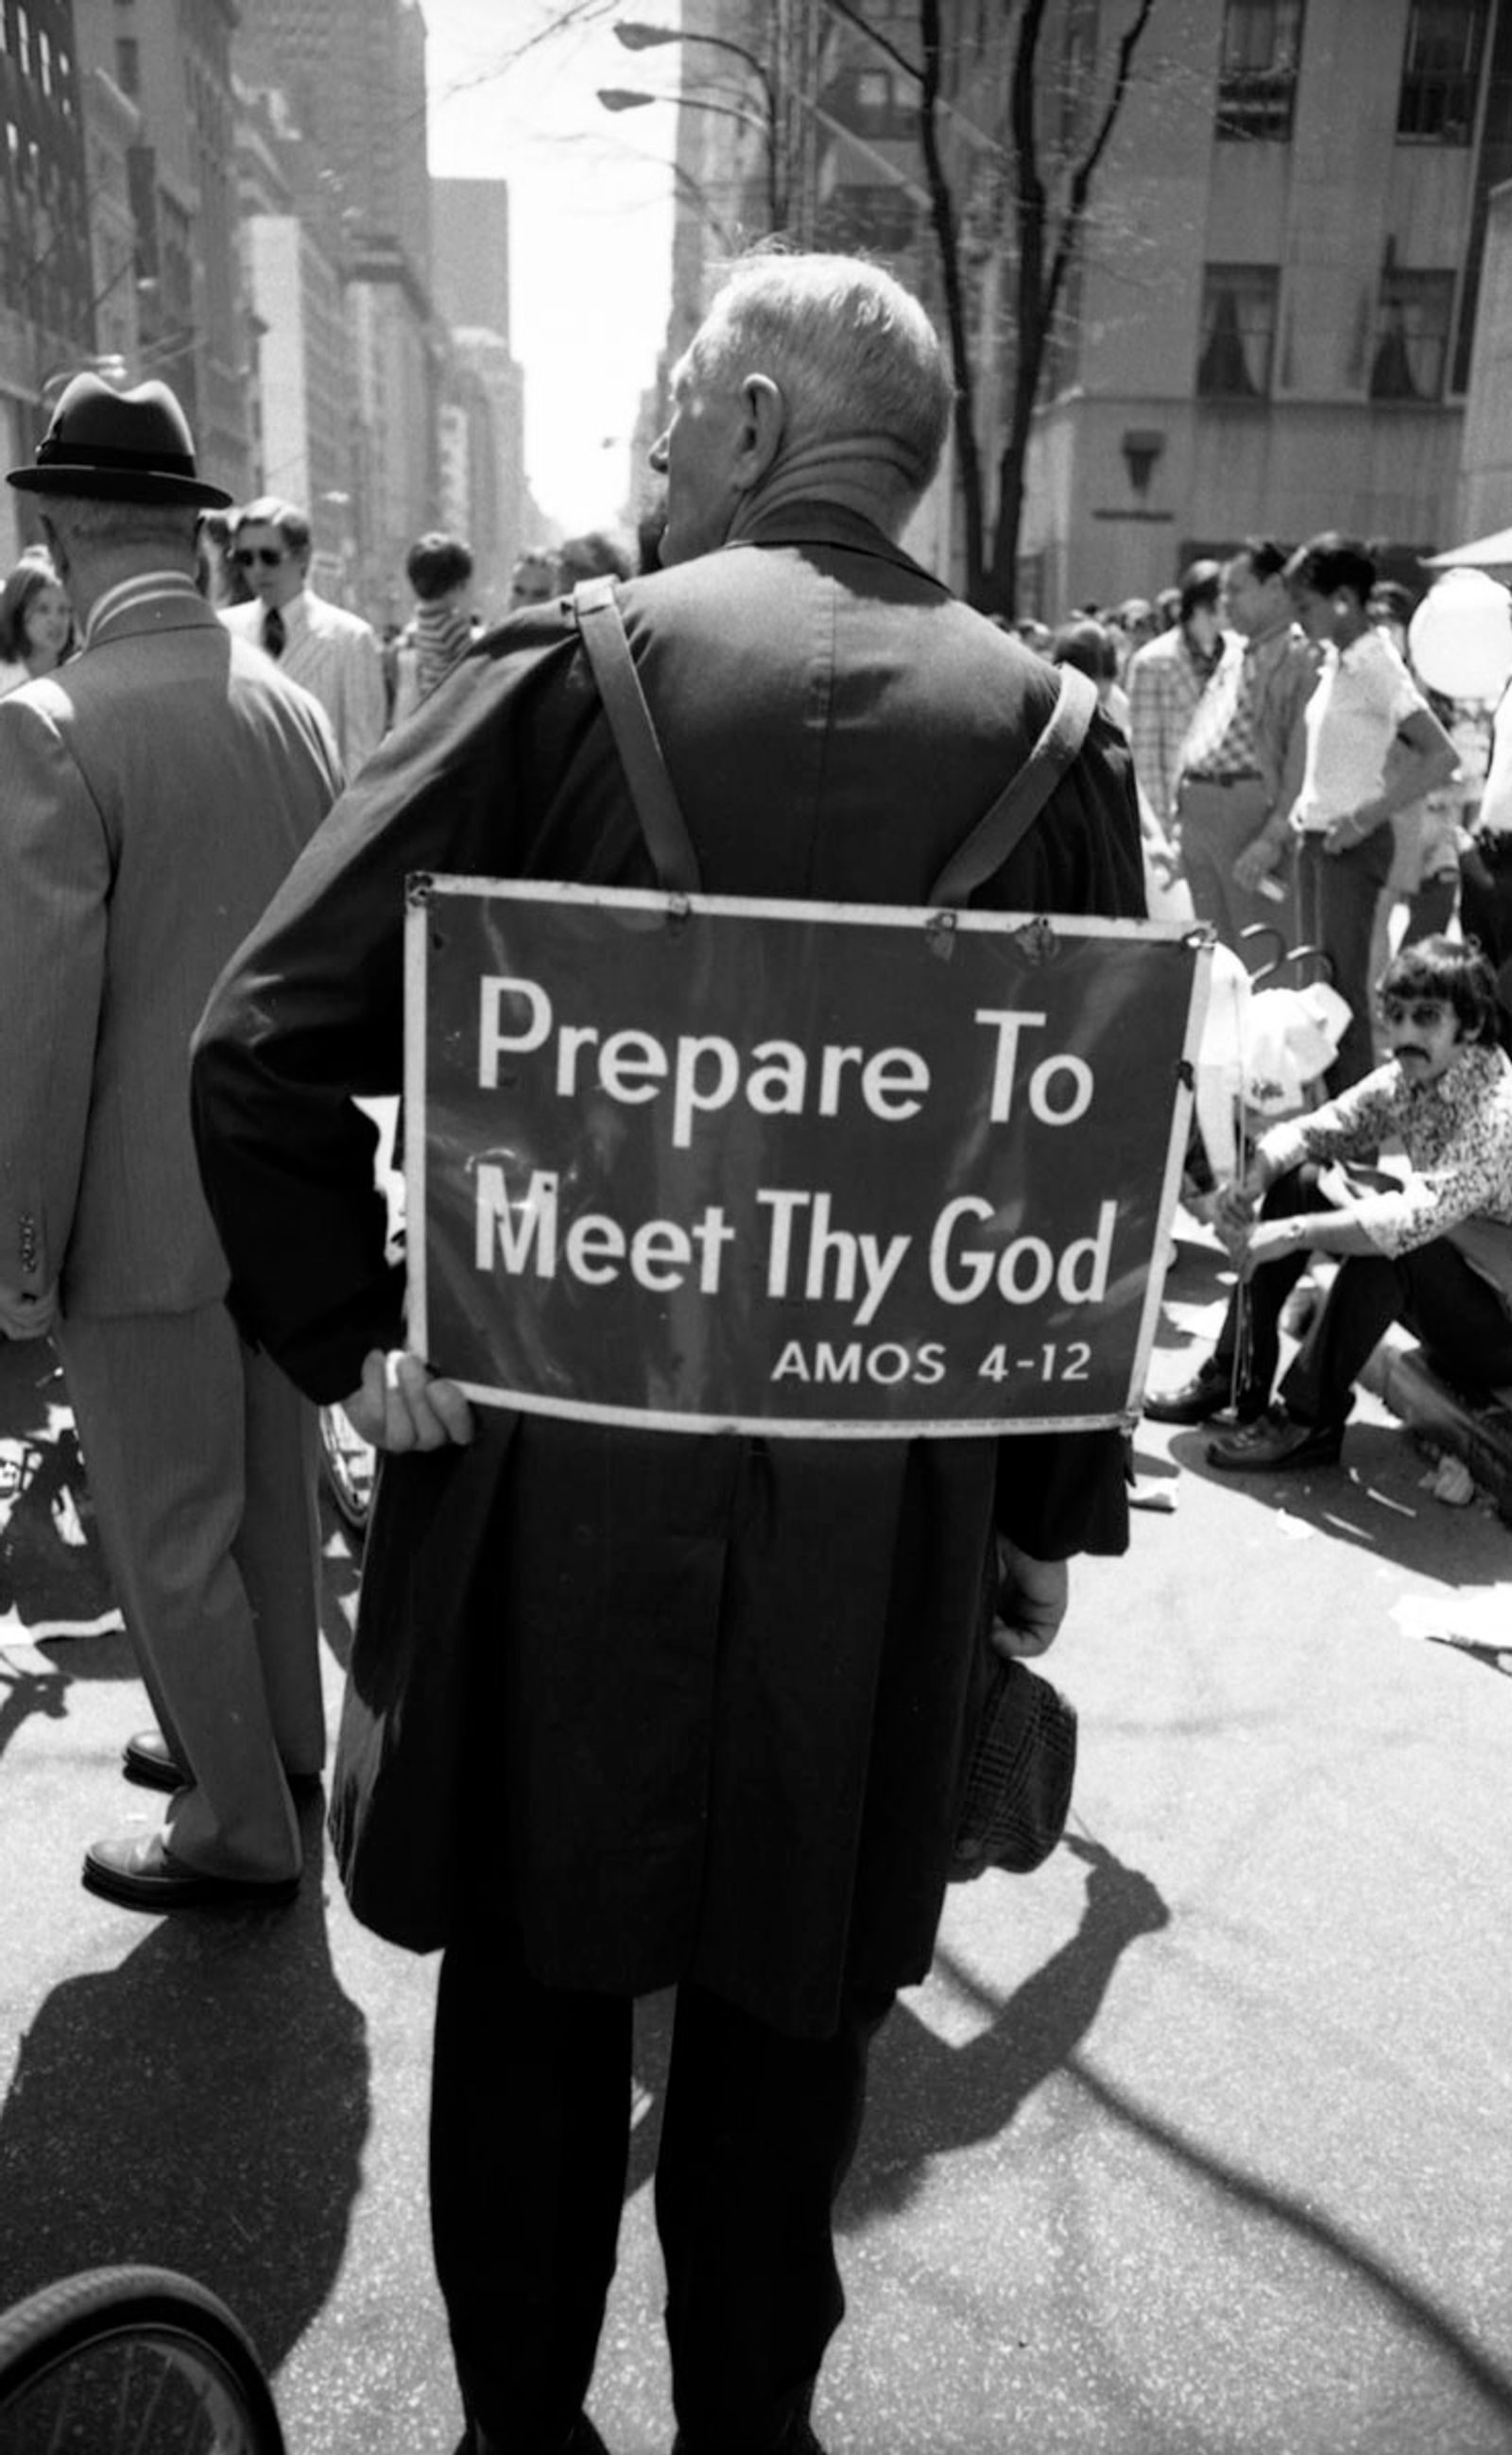 © Steven Edson - Prepare to meet thy God. NYC, NY